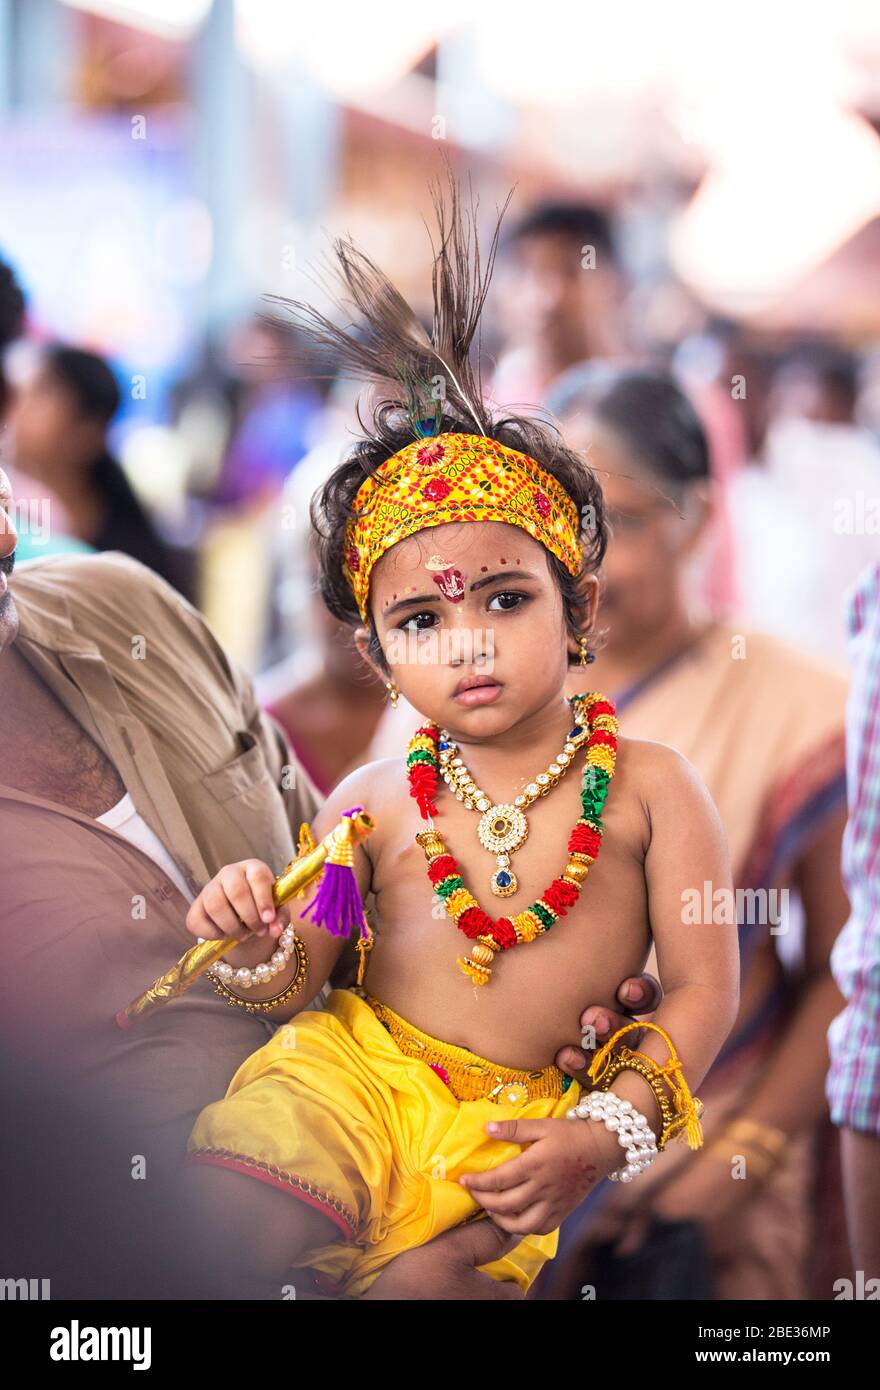 festivals in india,festivals kerala,dance forms kerala,kathakali ...